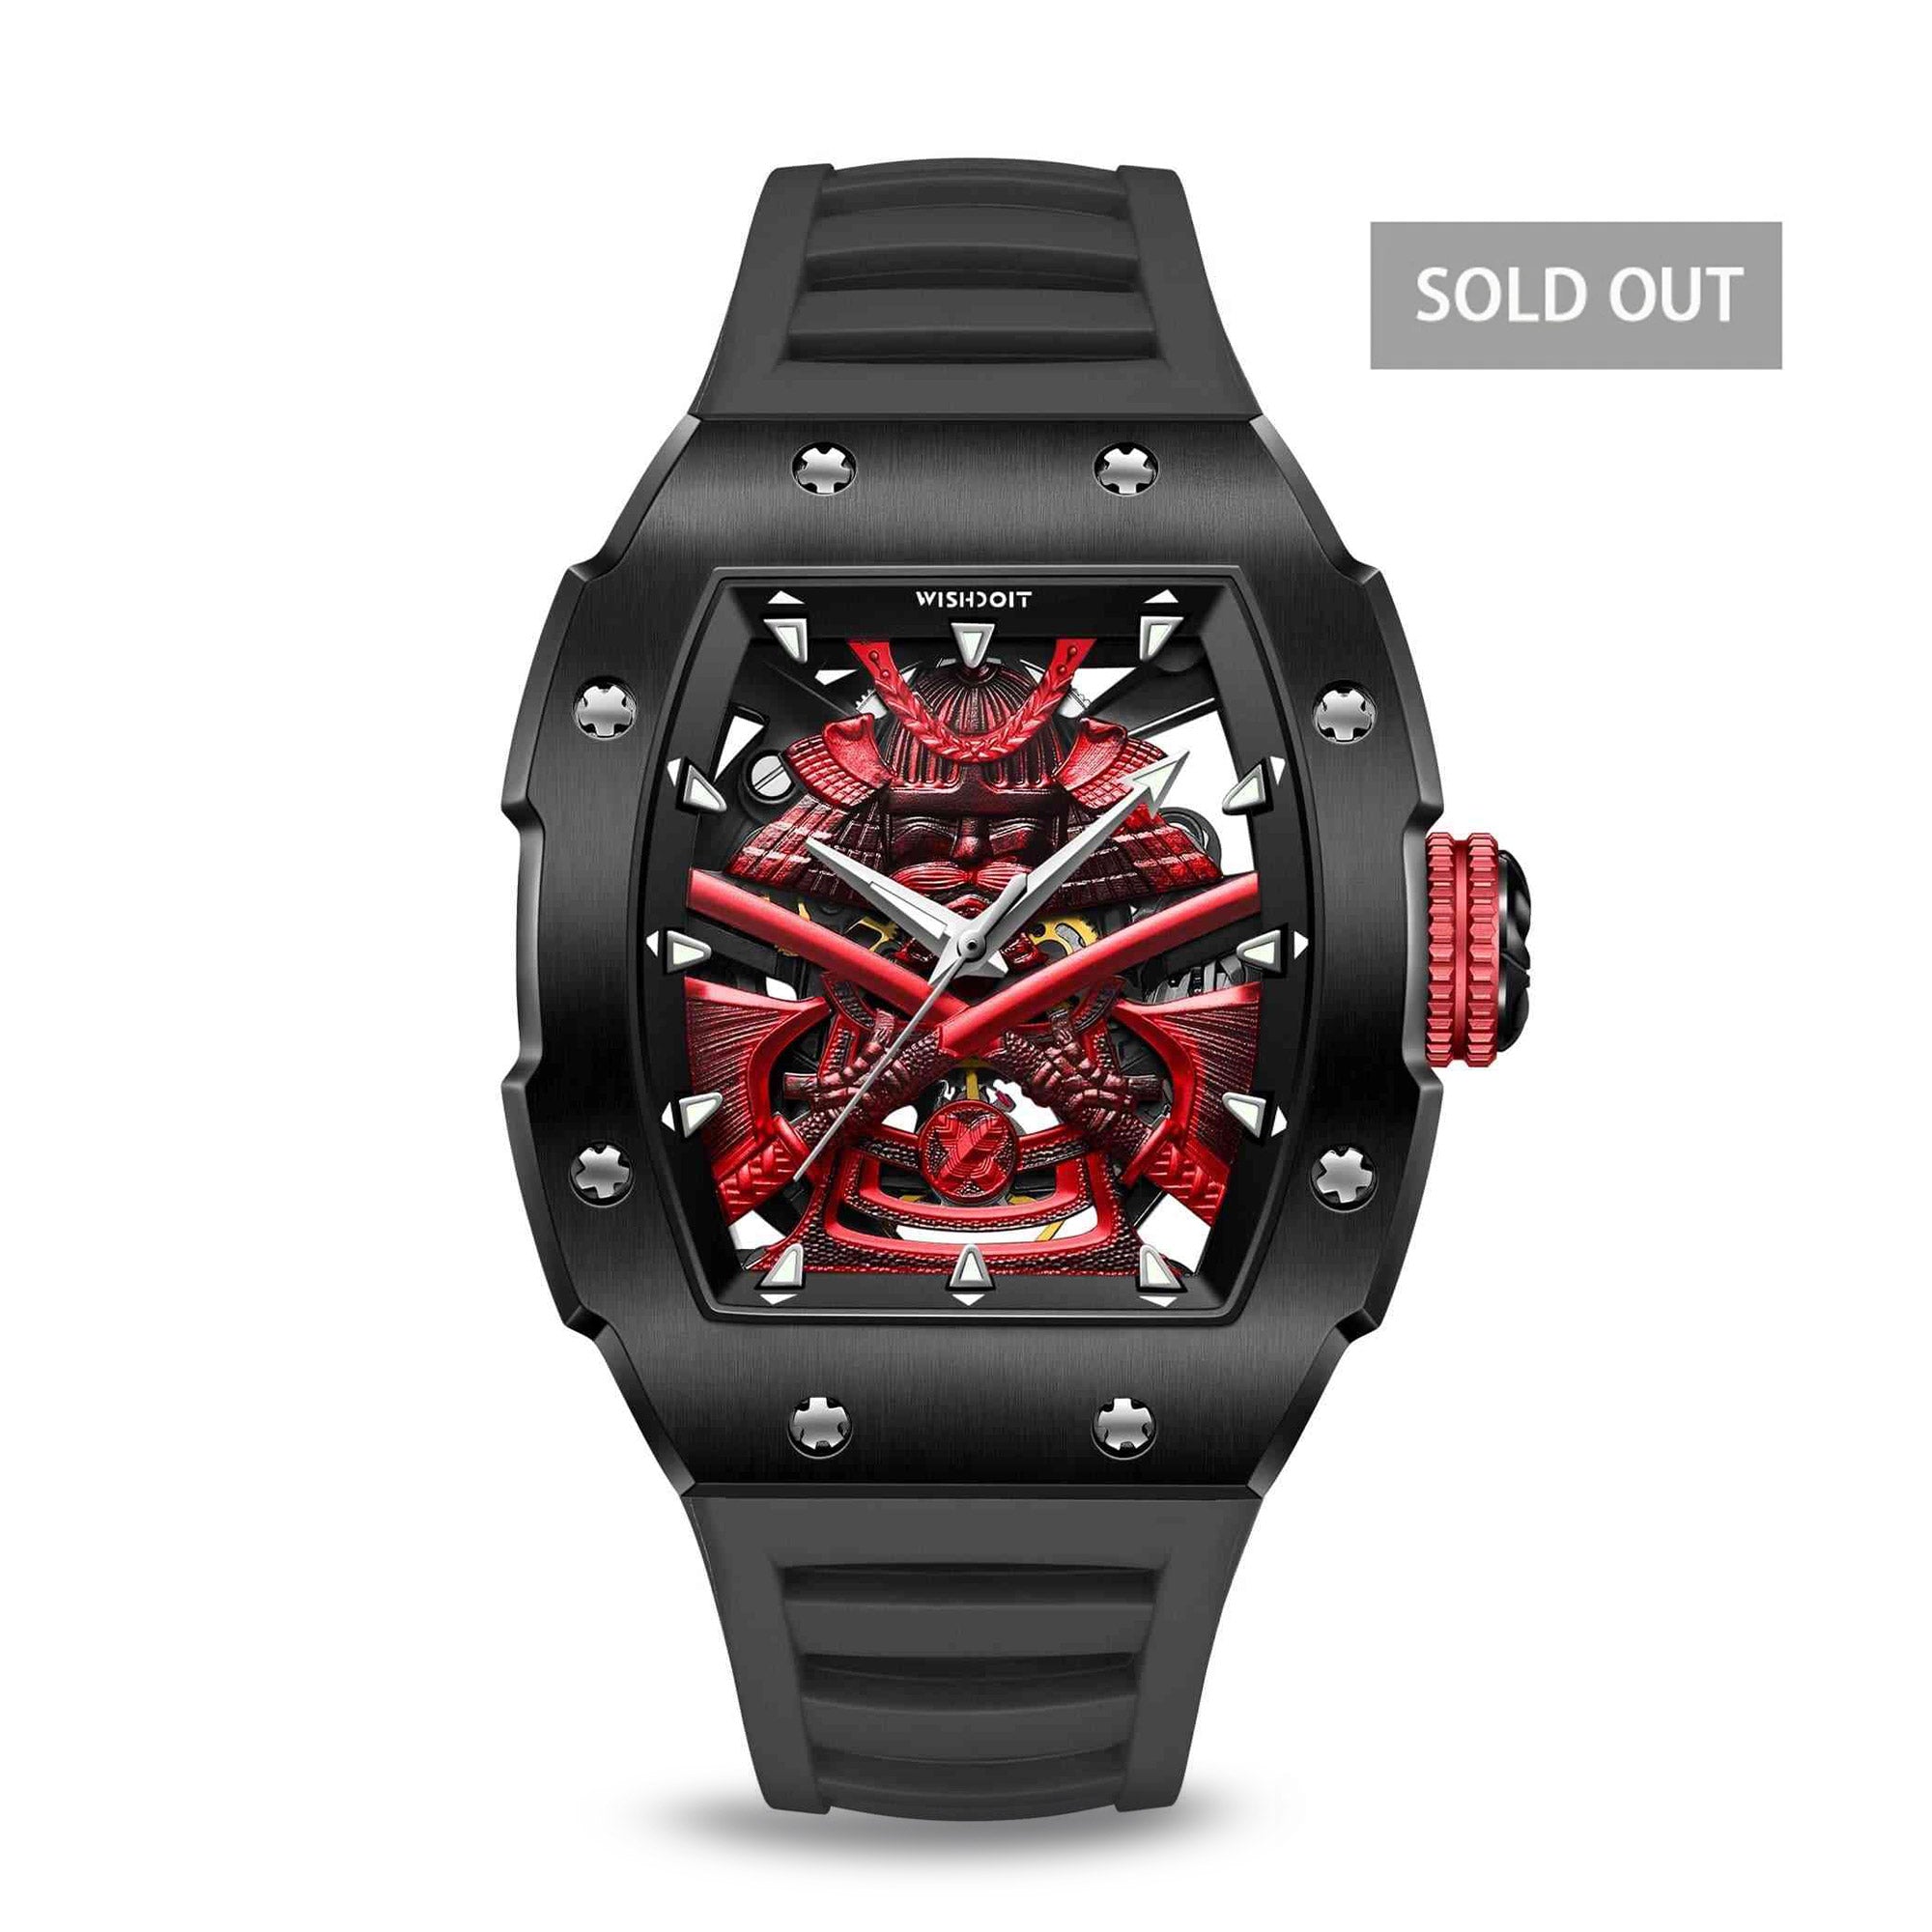 Wishdoit Watches Tonneau Luxury Automatic Mechanical Limited armor Watch | Fluorine Rubber Watch Strap|Black